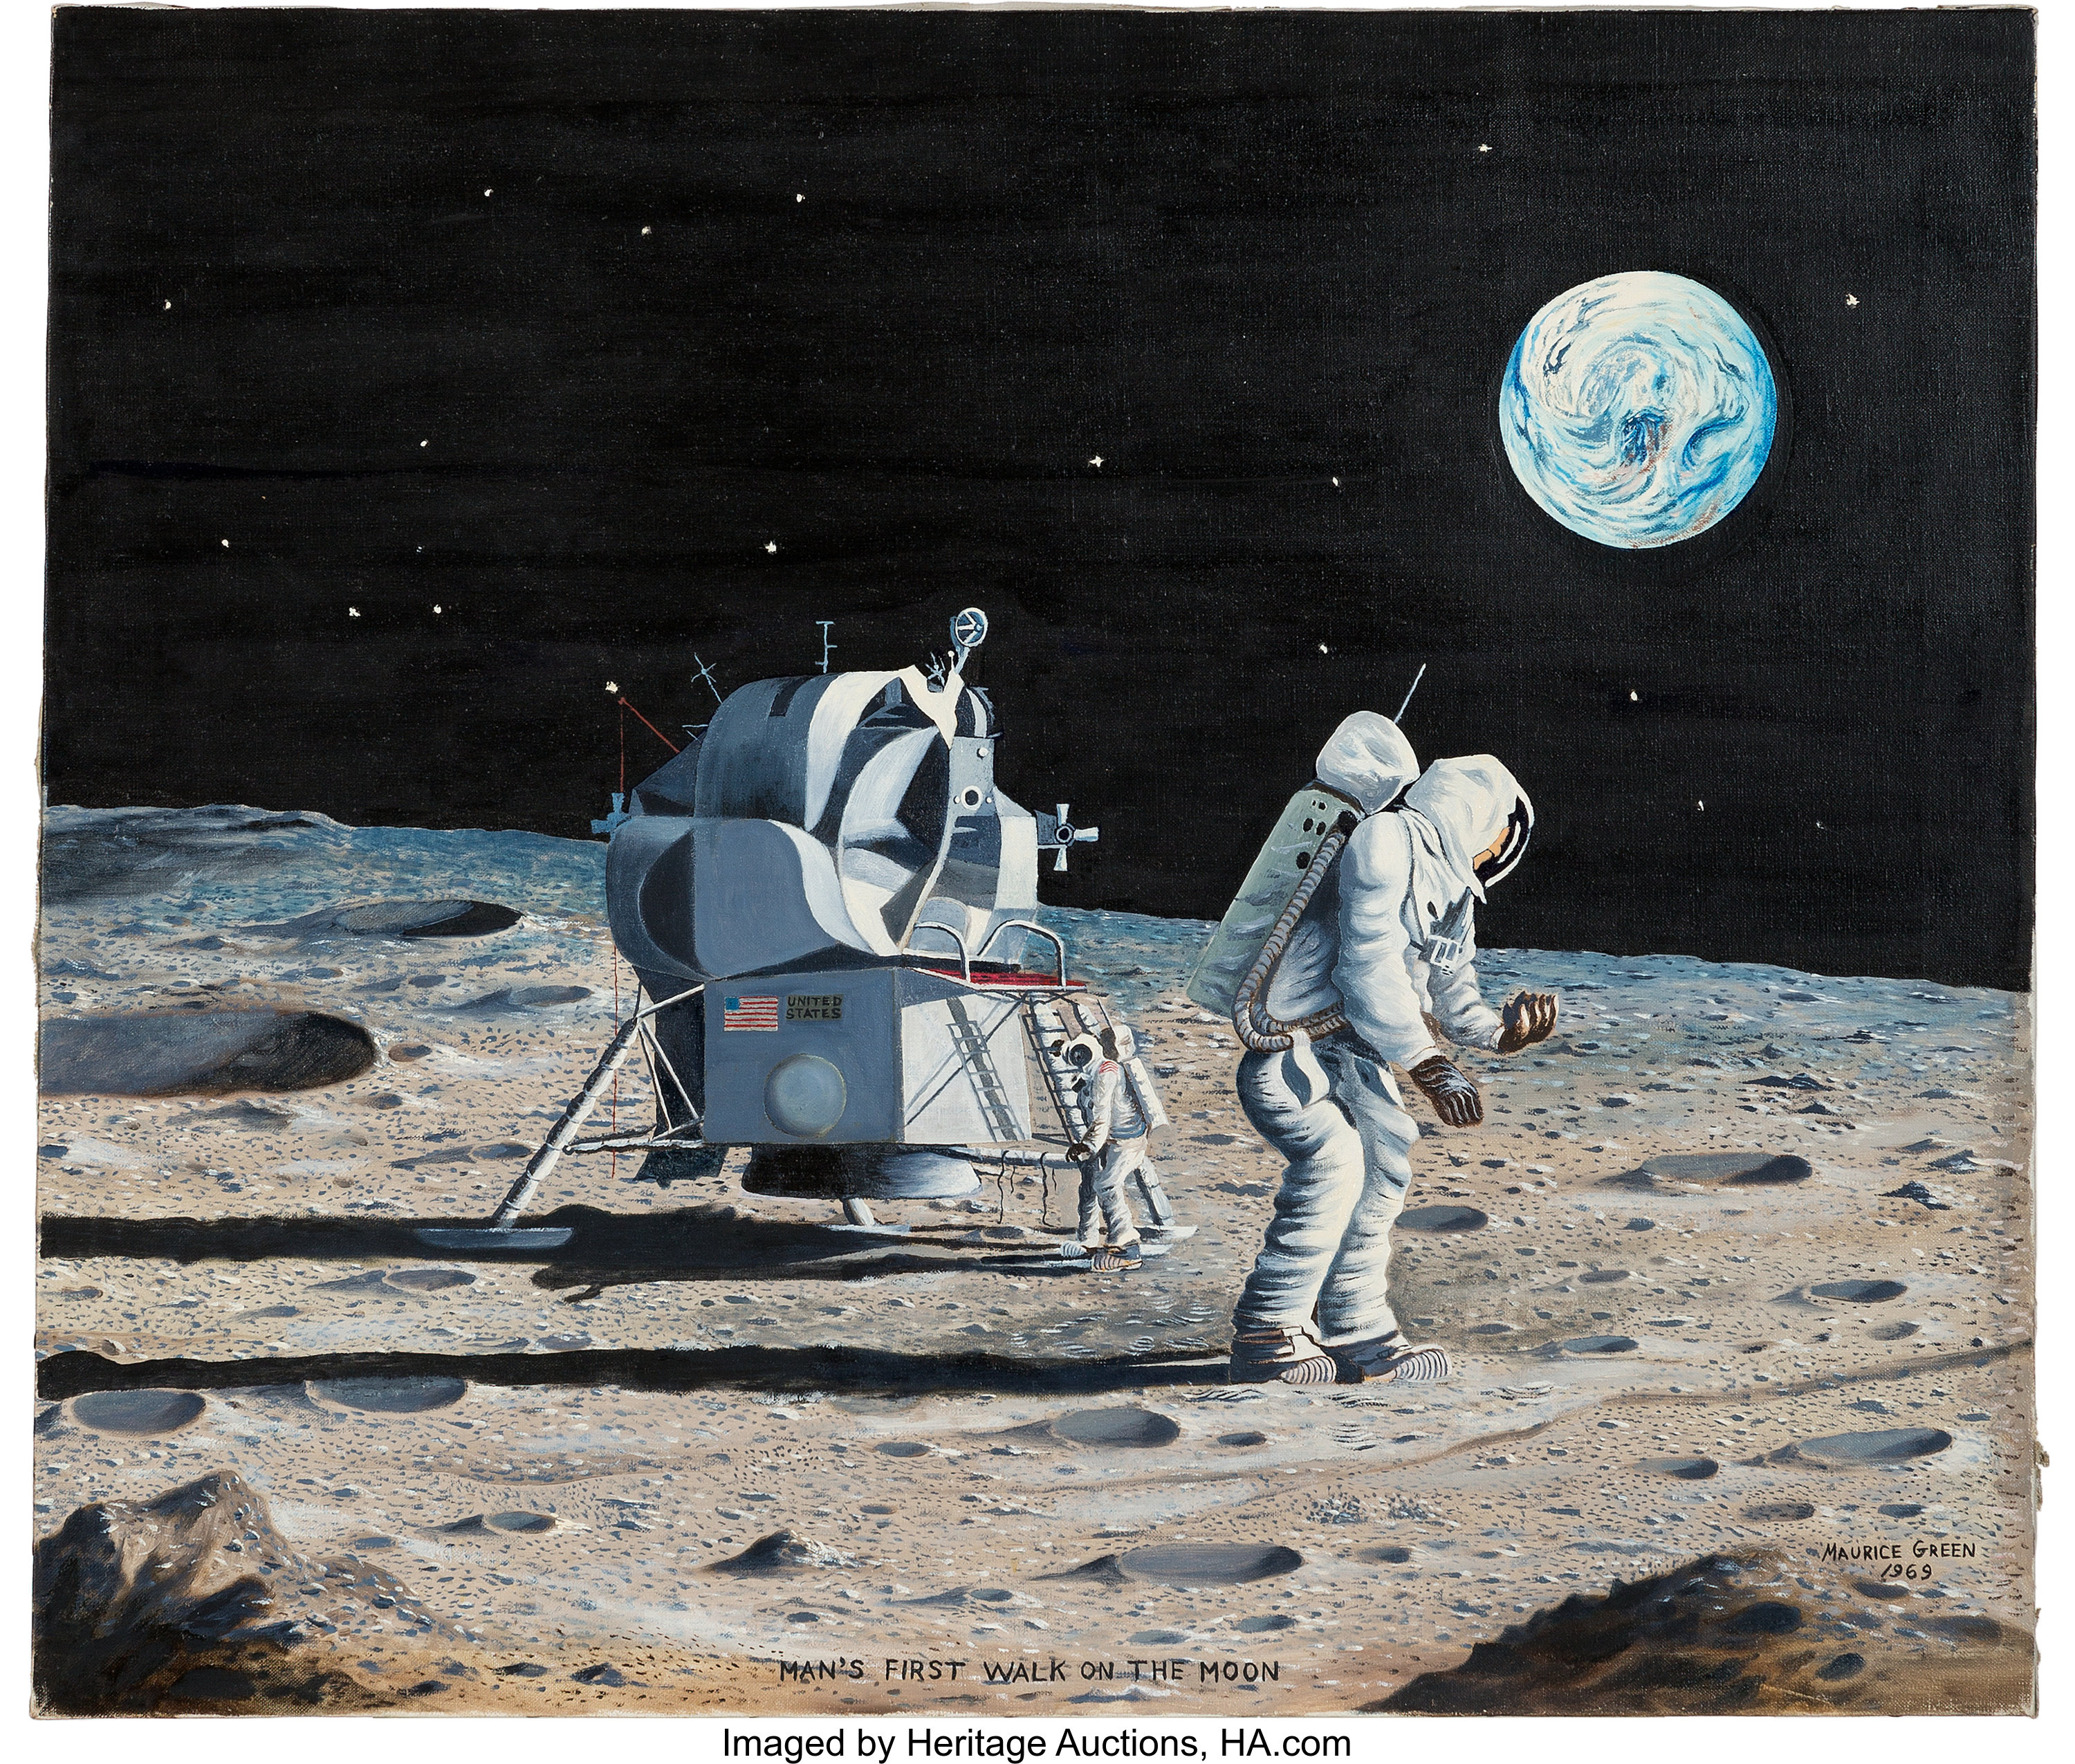 Armstrong on the moon. Армстронг Луна 1969.